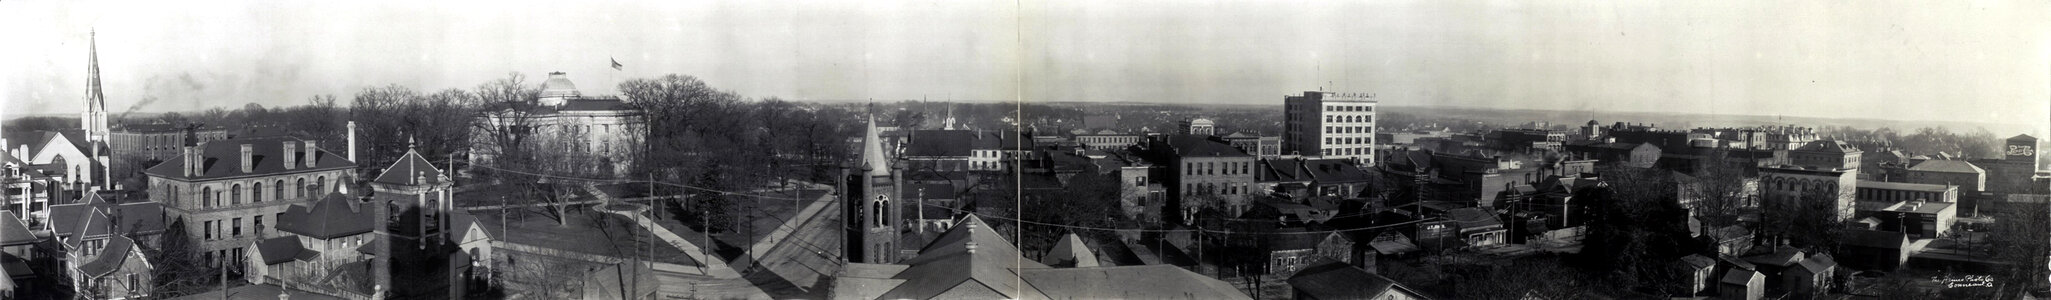 Downtown panorama of Raleigh, North Carolina photo